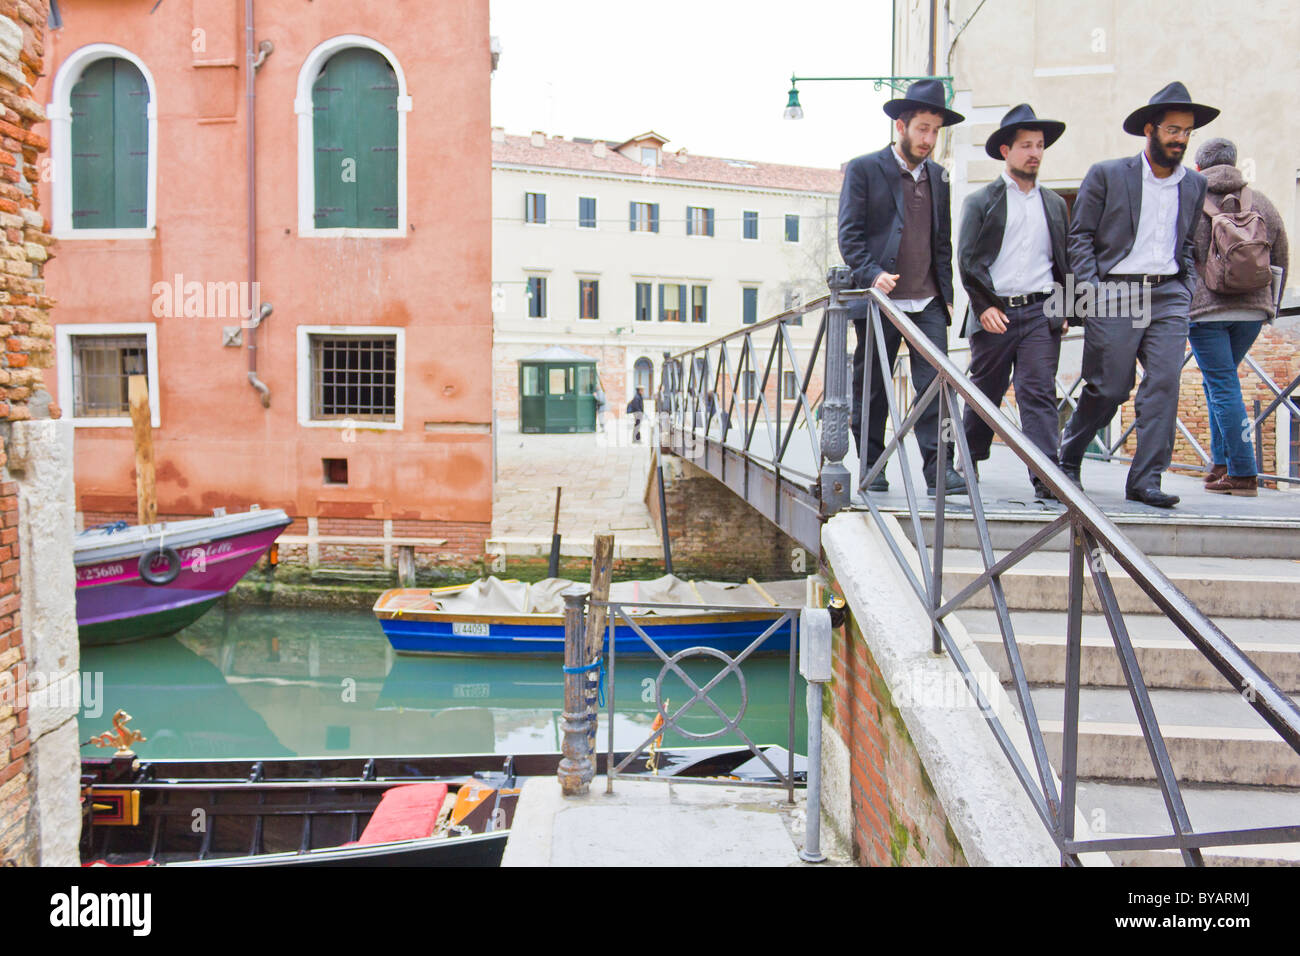 Jewish Ghetto, Ghetto Nuovo ('New Ghetto'). Men of Jewish faith crossing bridge across canal. Stock Photo